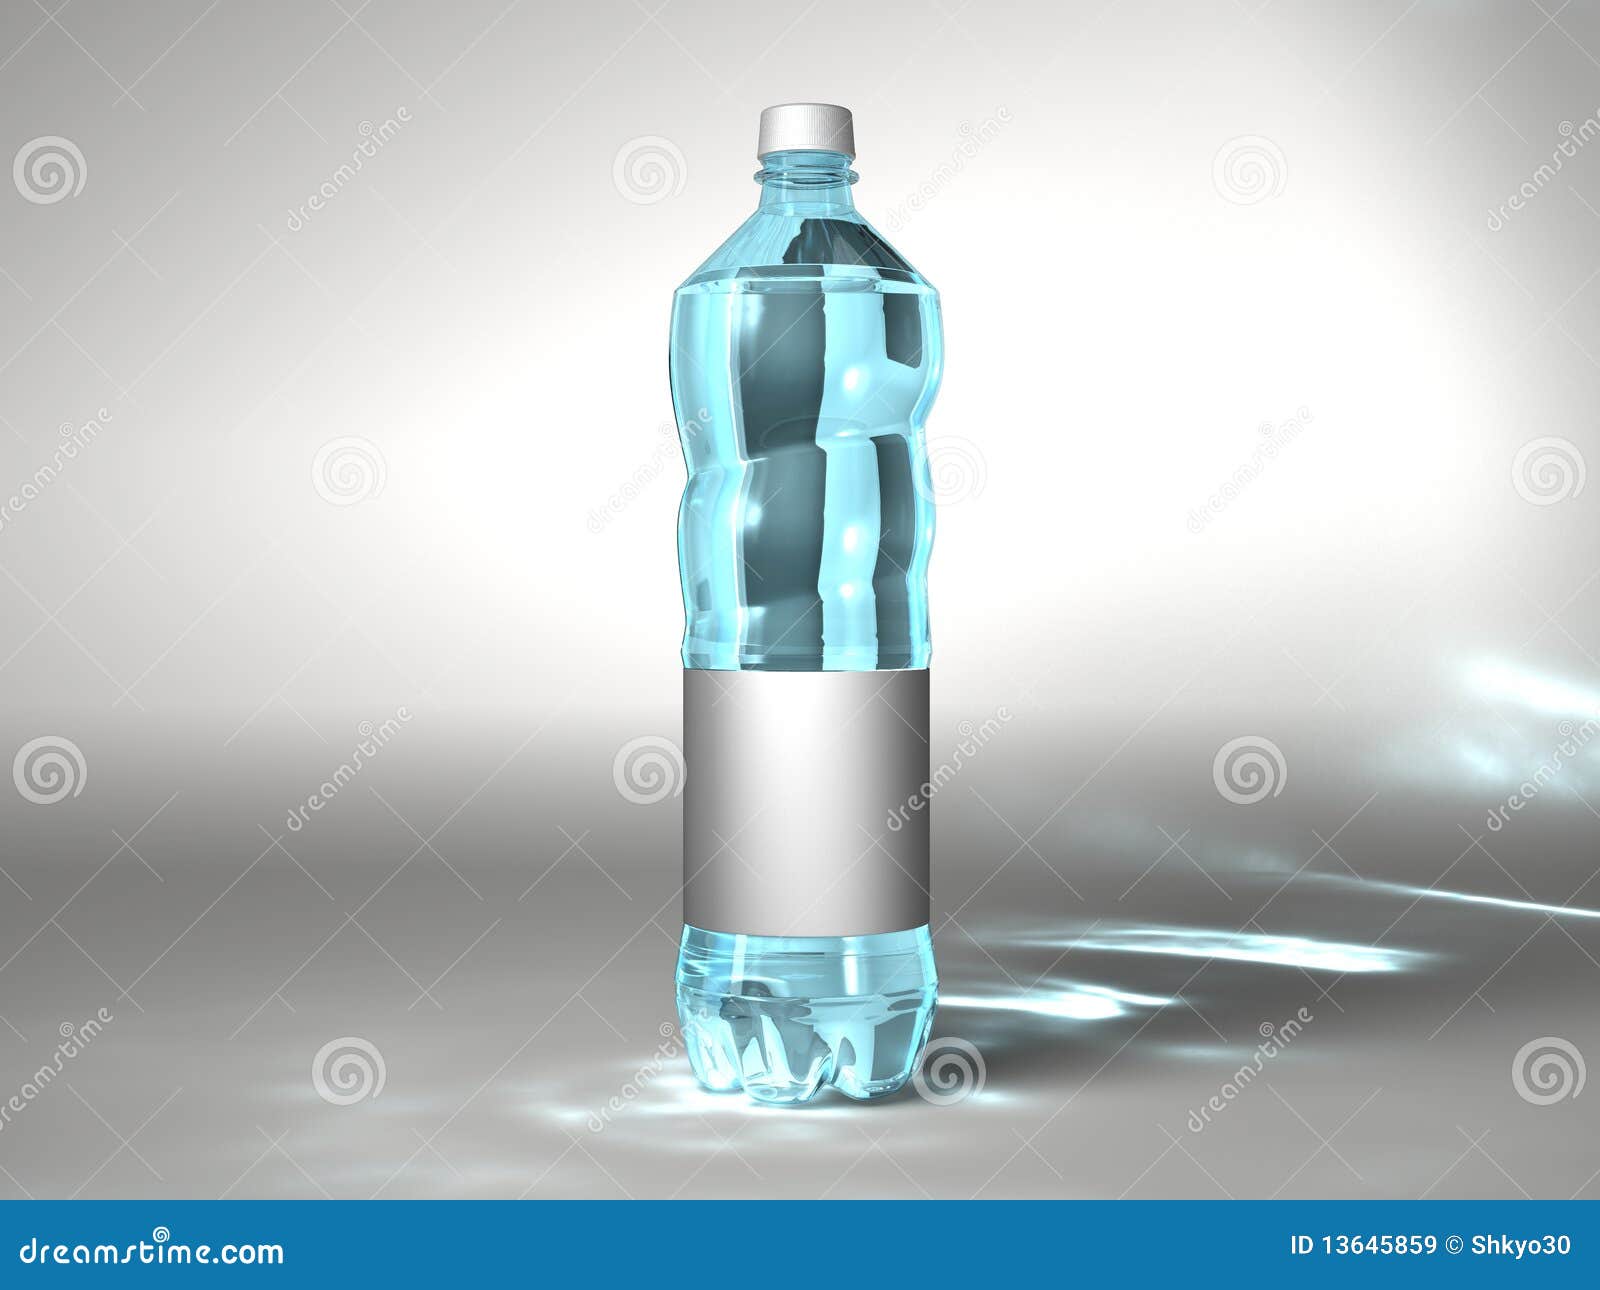 Neutral water bottle stock illustration. Illustration of mineral - 13645859